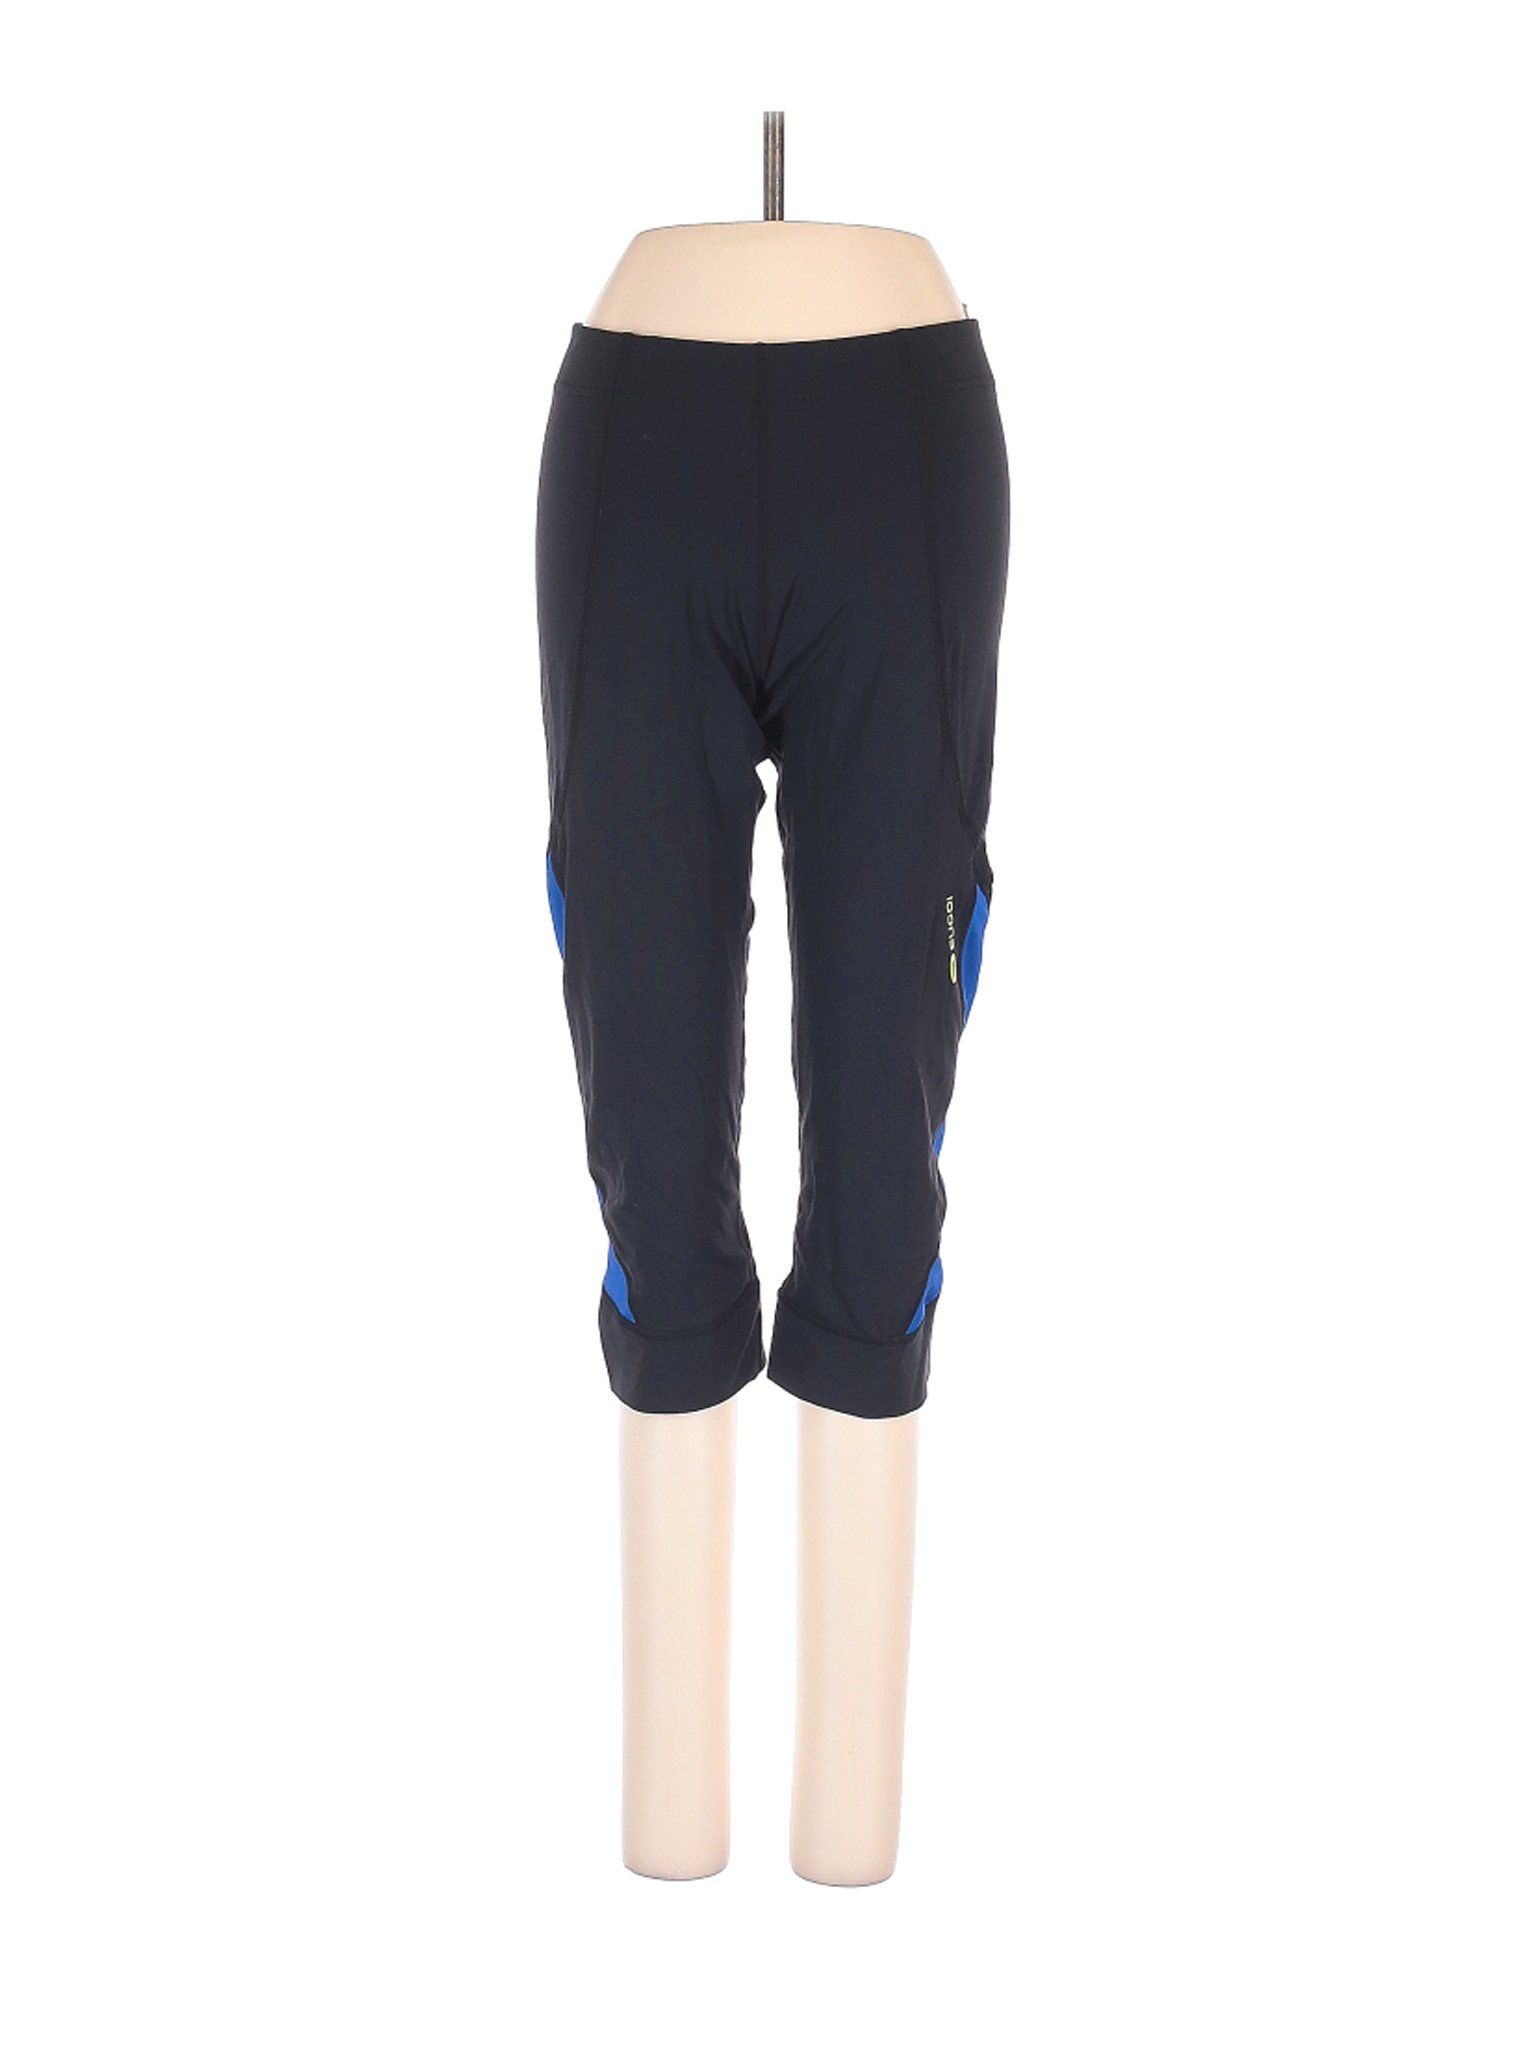 Sugoi Women Blue Active Pants S | eBay